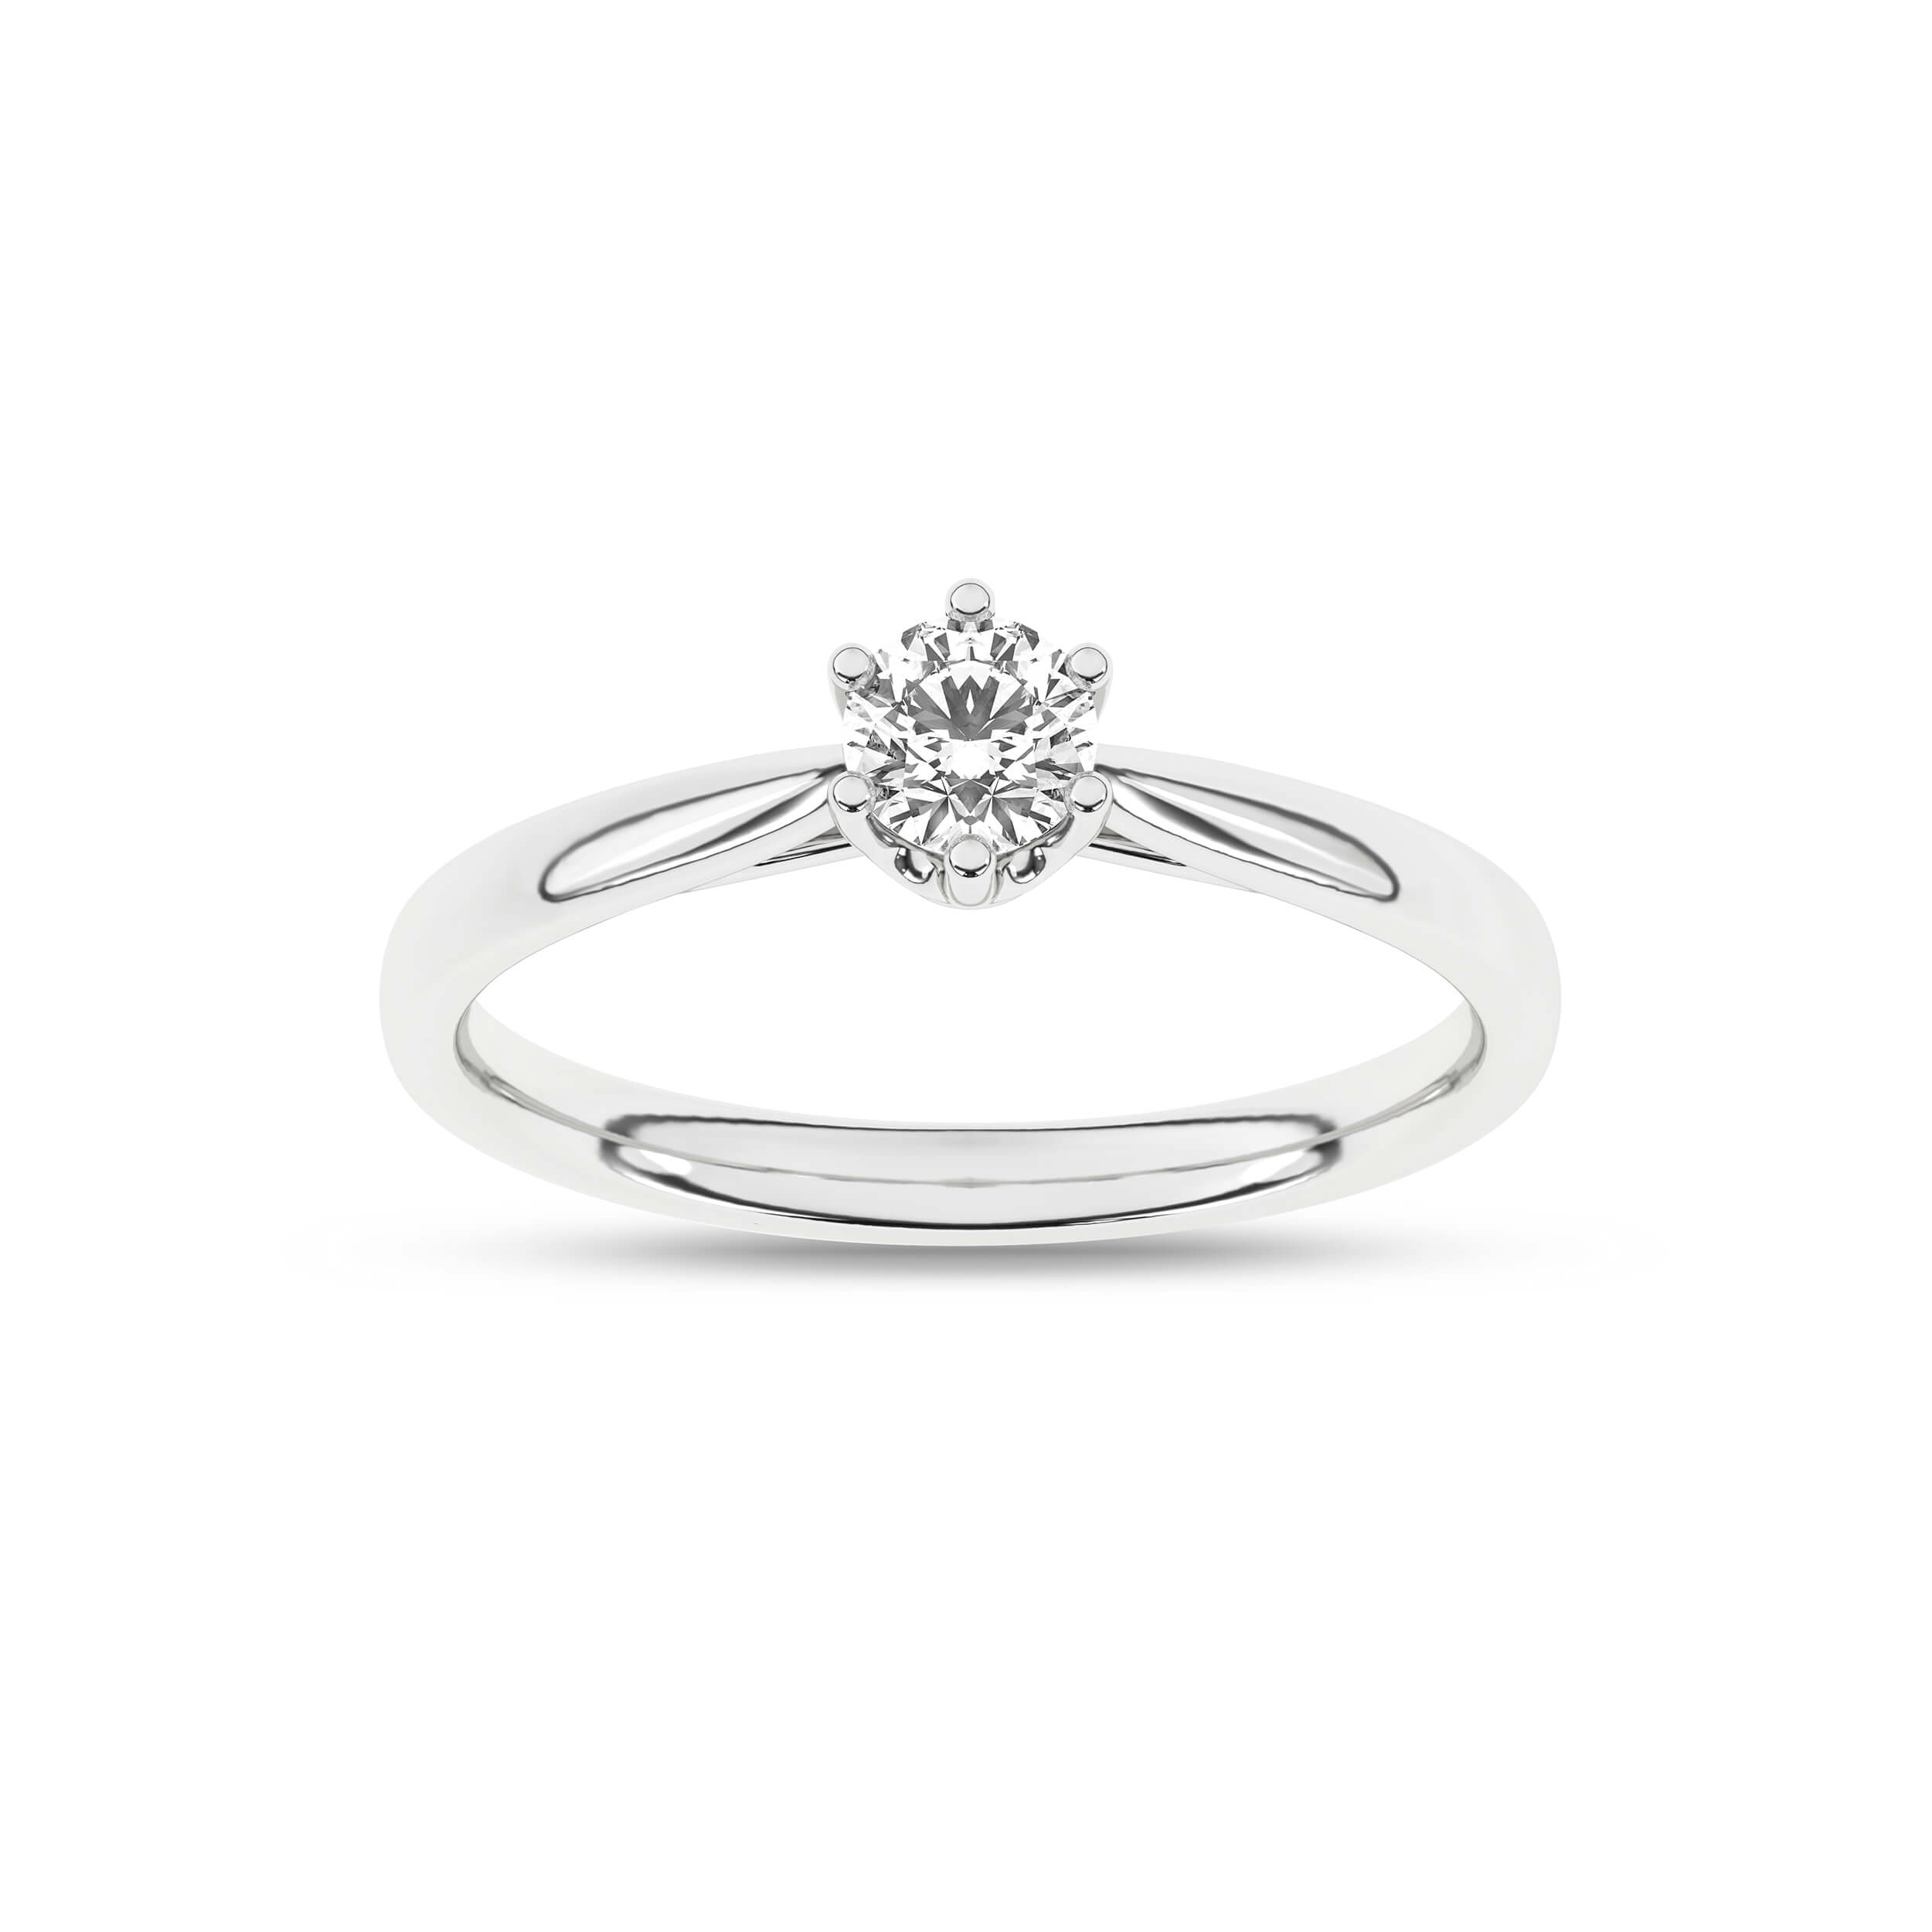 Inel de logodna din Aur Alb 14K cu Diamant 0.25Ct, articol RS1477, previzualizare foto 1